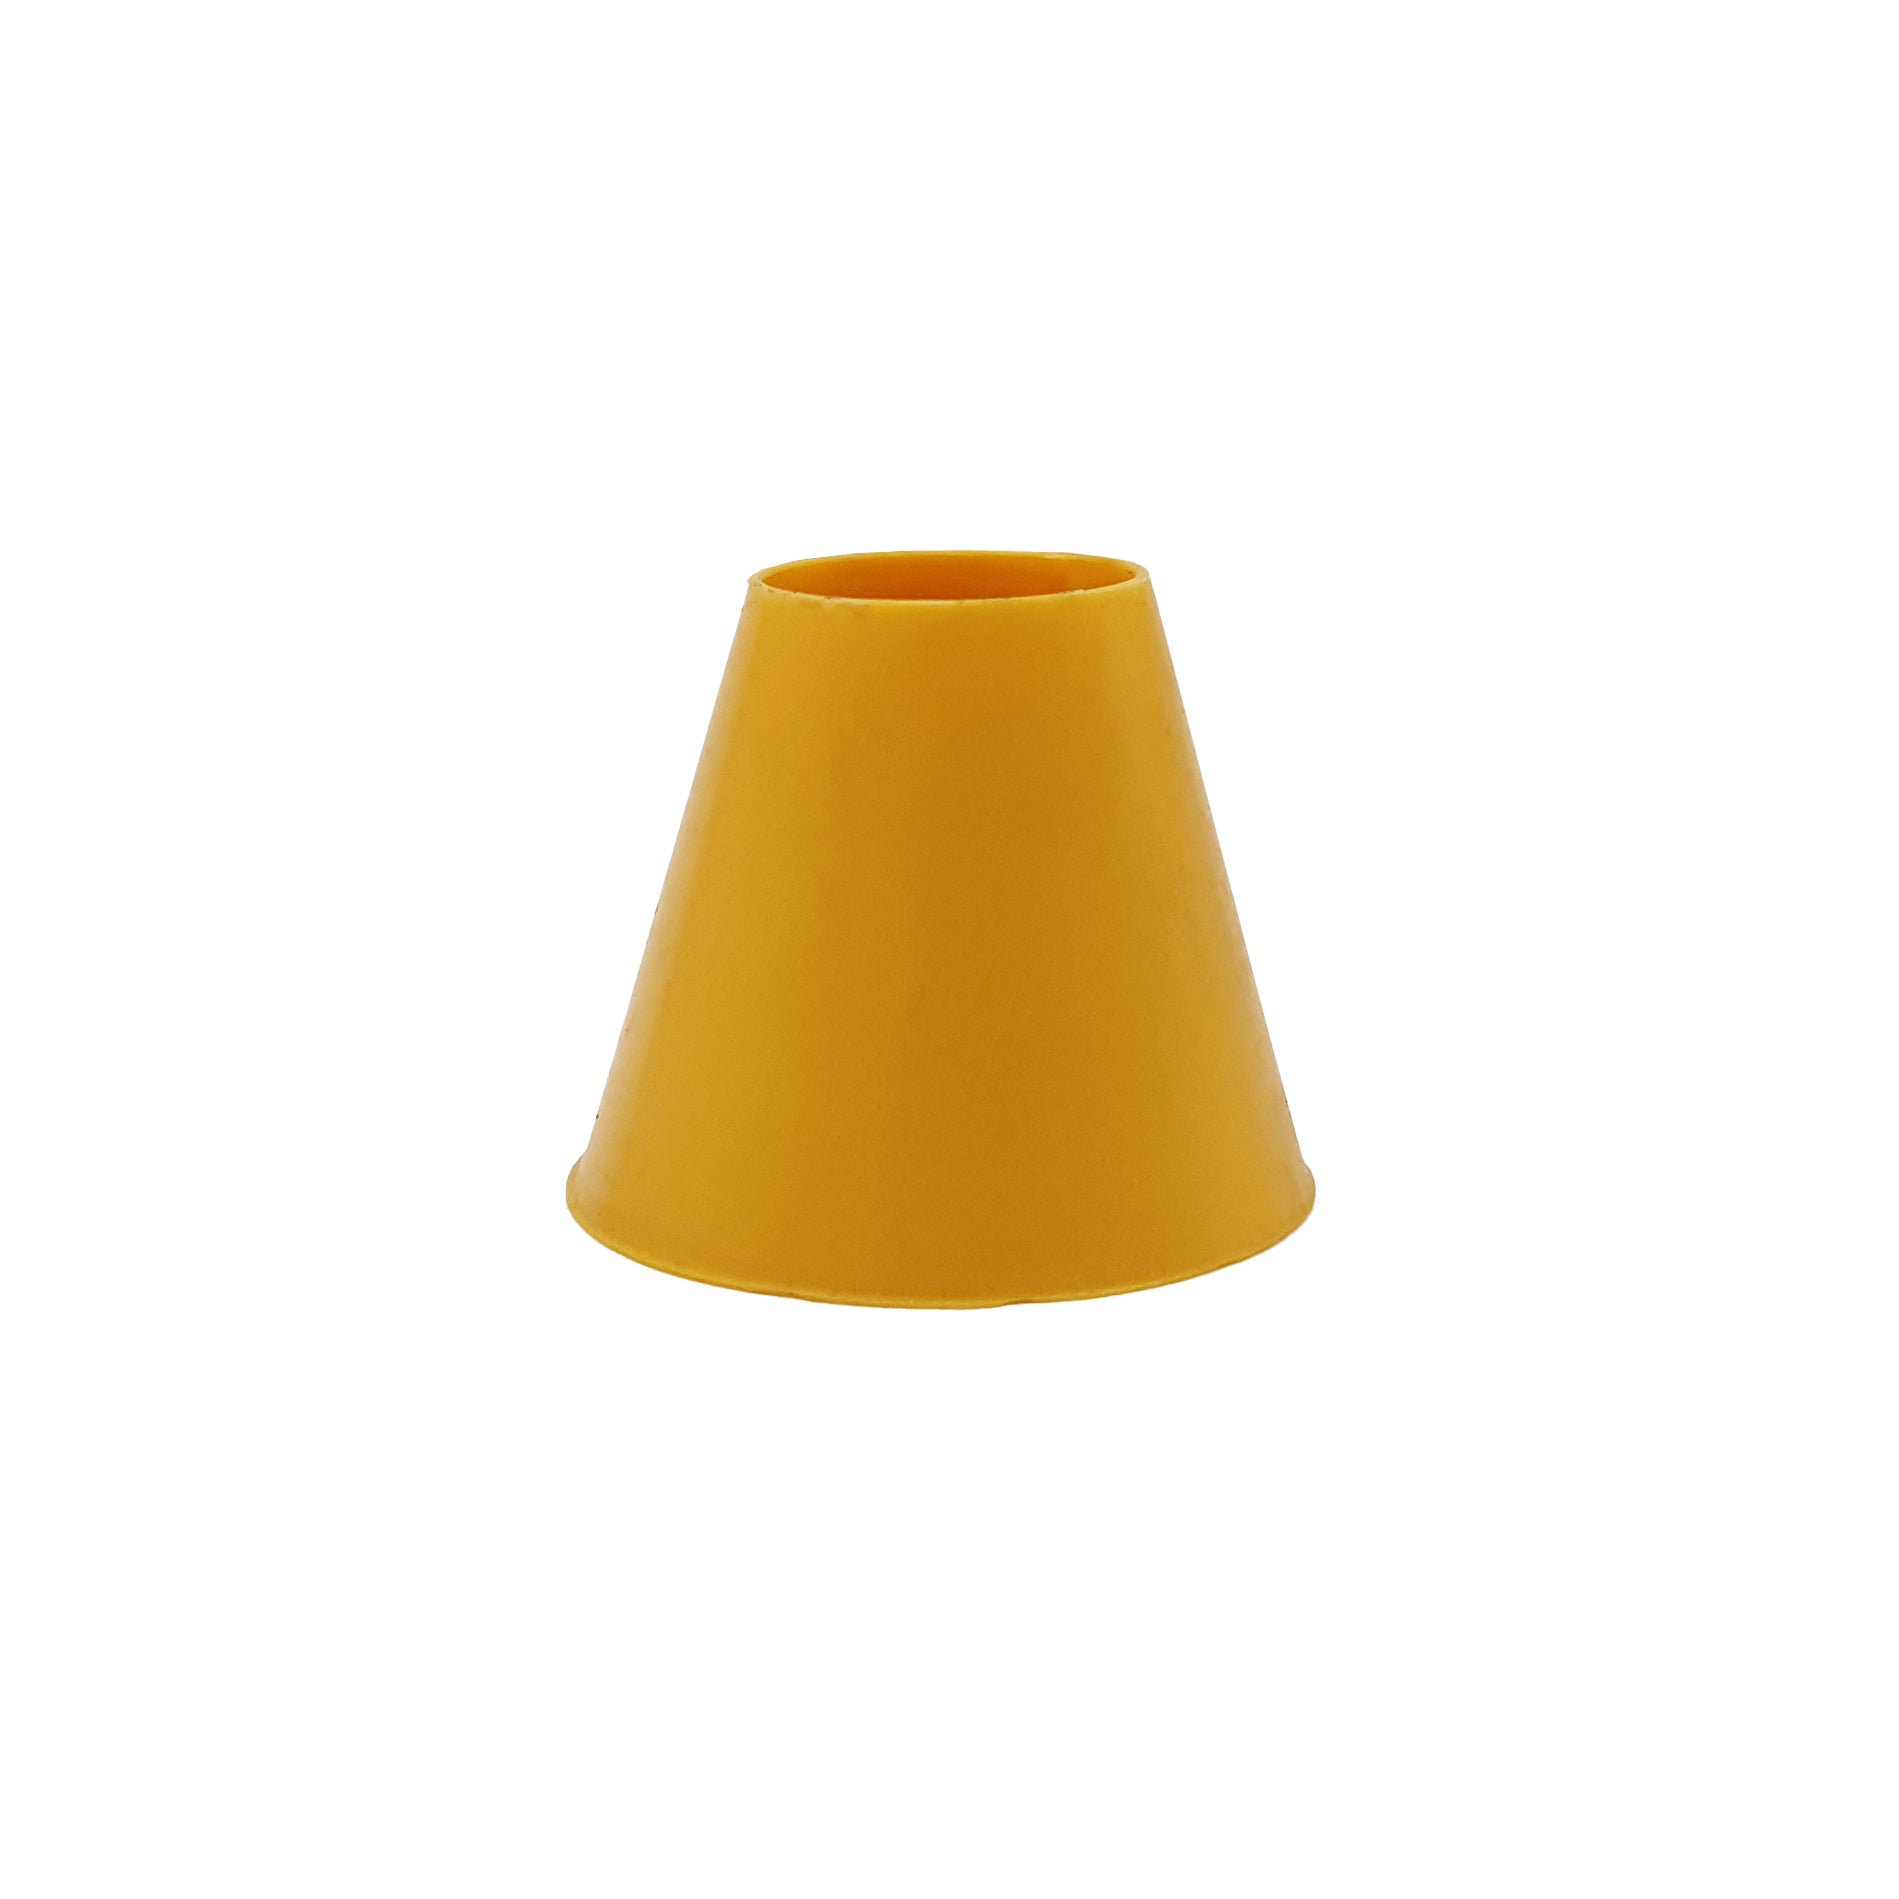 Yellow silicone spare cone for olive oil